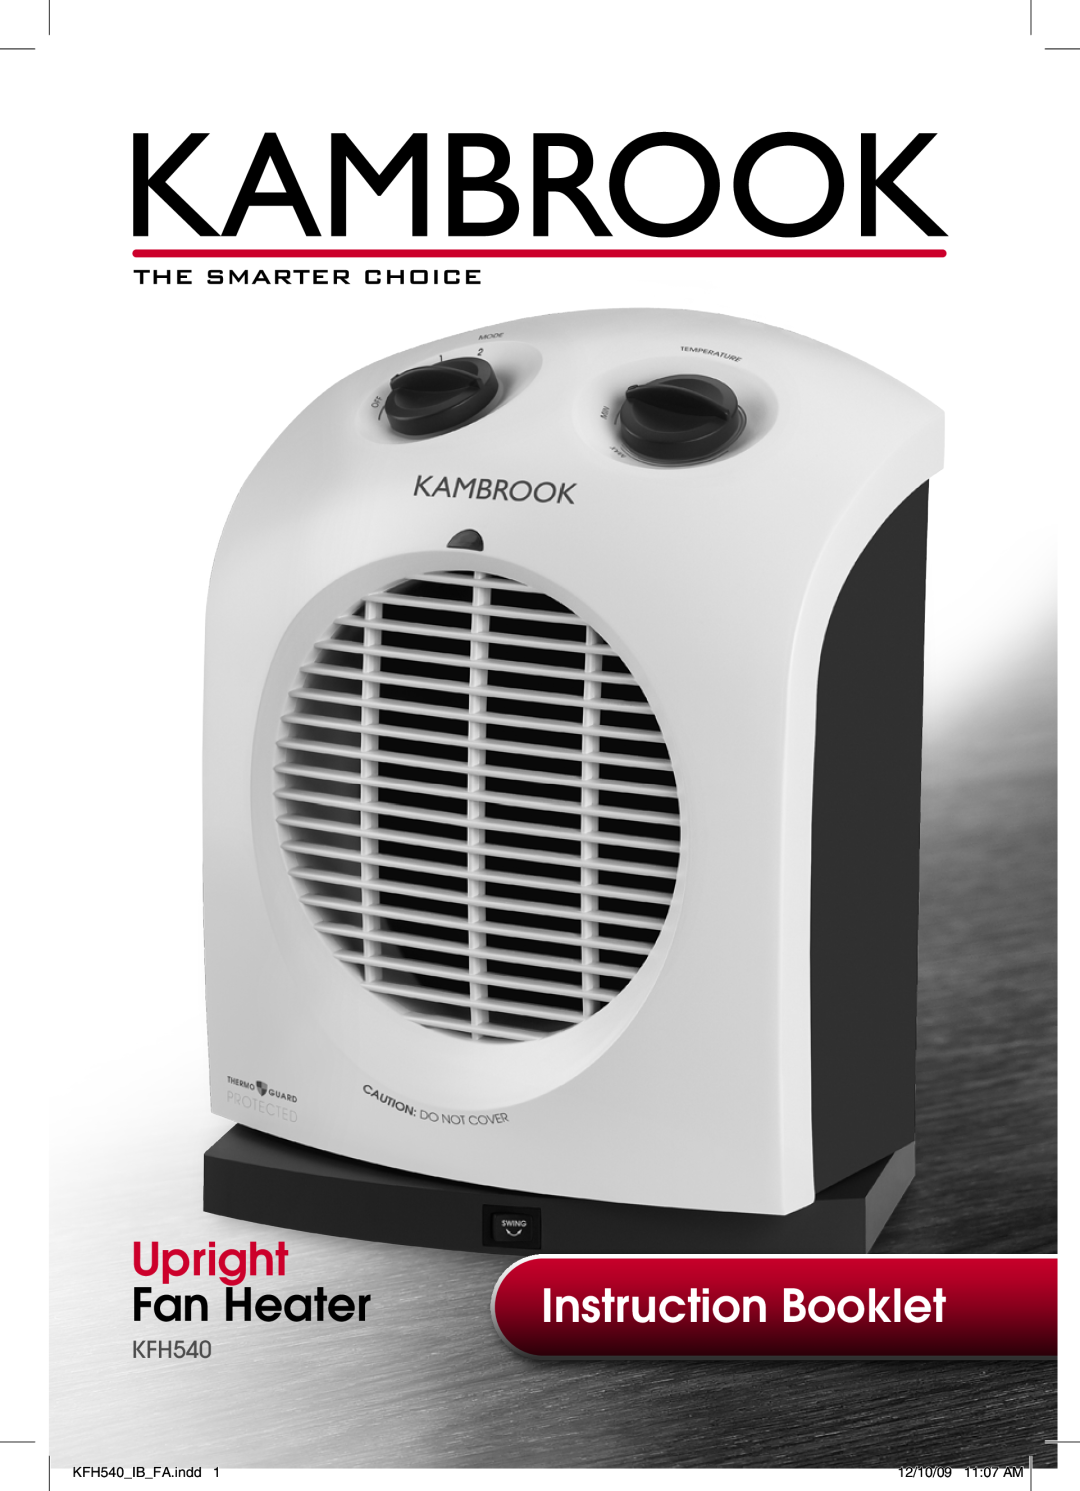 Kambrook manual Upright, Fan Heater, Instruction Booklet, KFH540IBFA.indd, 12/10/09 1107 AM 